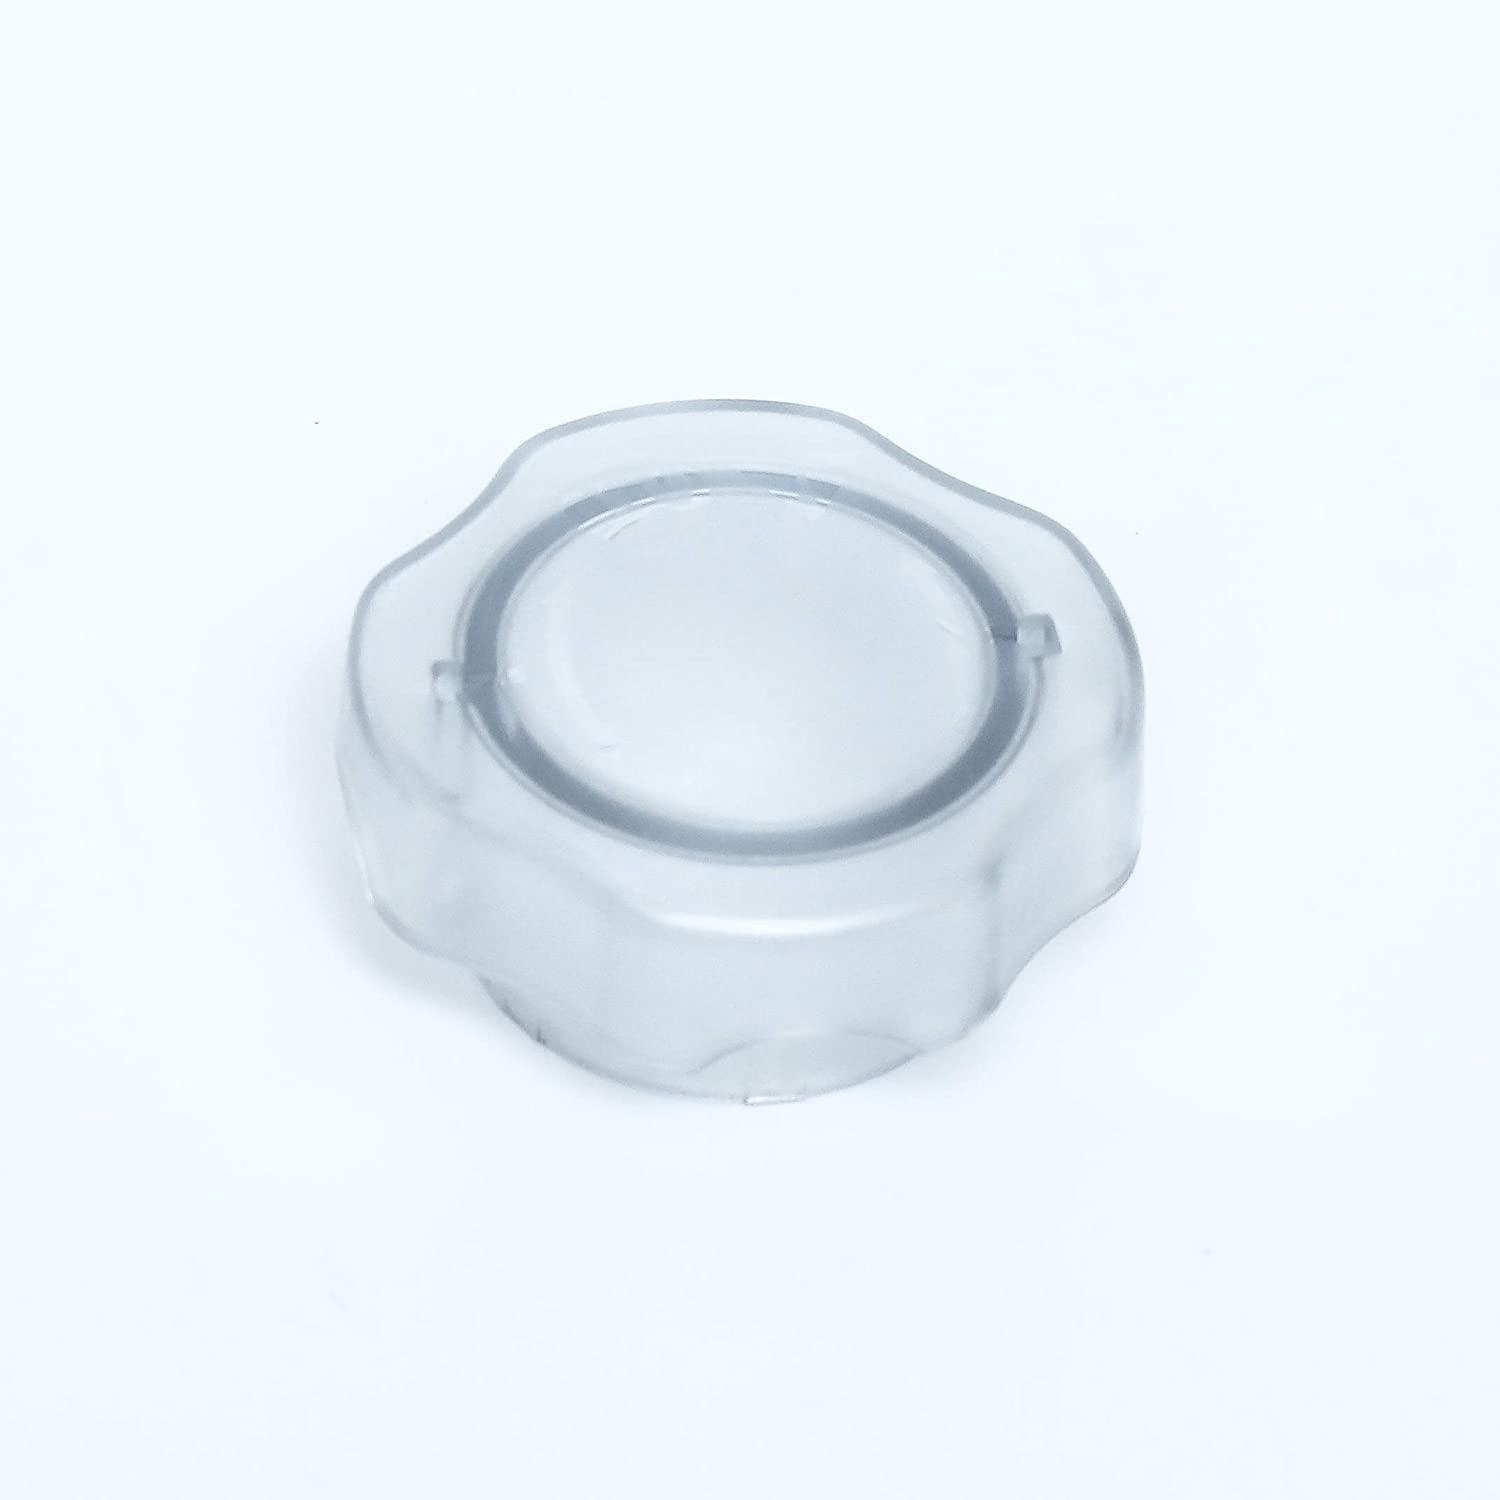 Unbekannt Inner Transparent Plastic Lid for Vitamix Low Profile 1.8 Litre Container | Jug Mixer Replacement Parts | Vitamix Container Accessories